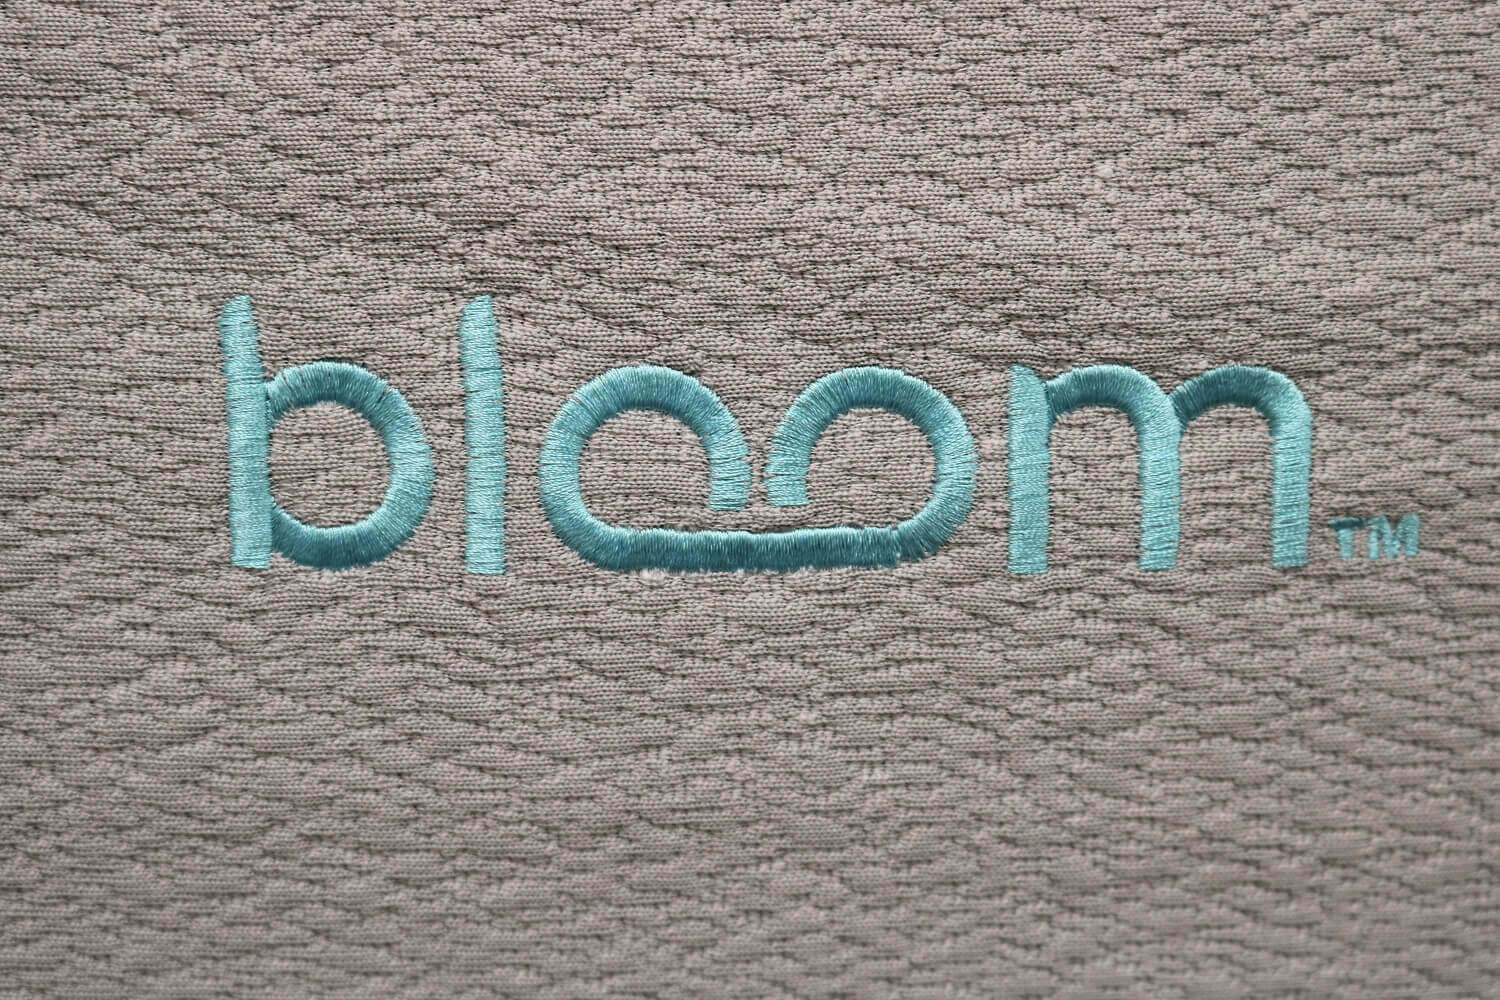 Image of the Bloom Mist mattress company logo.